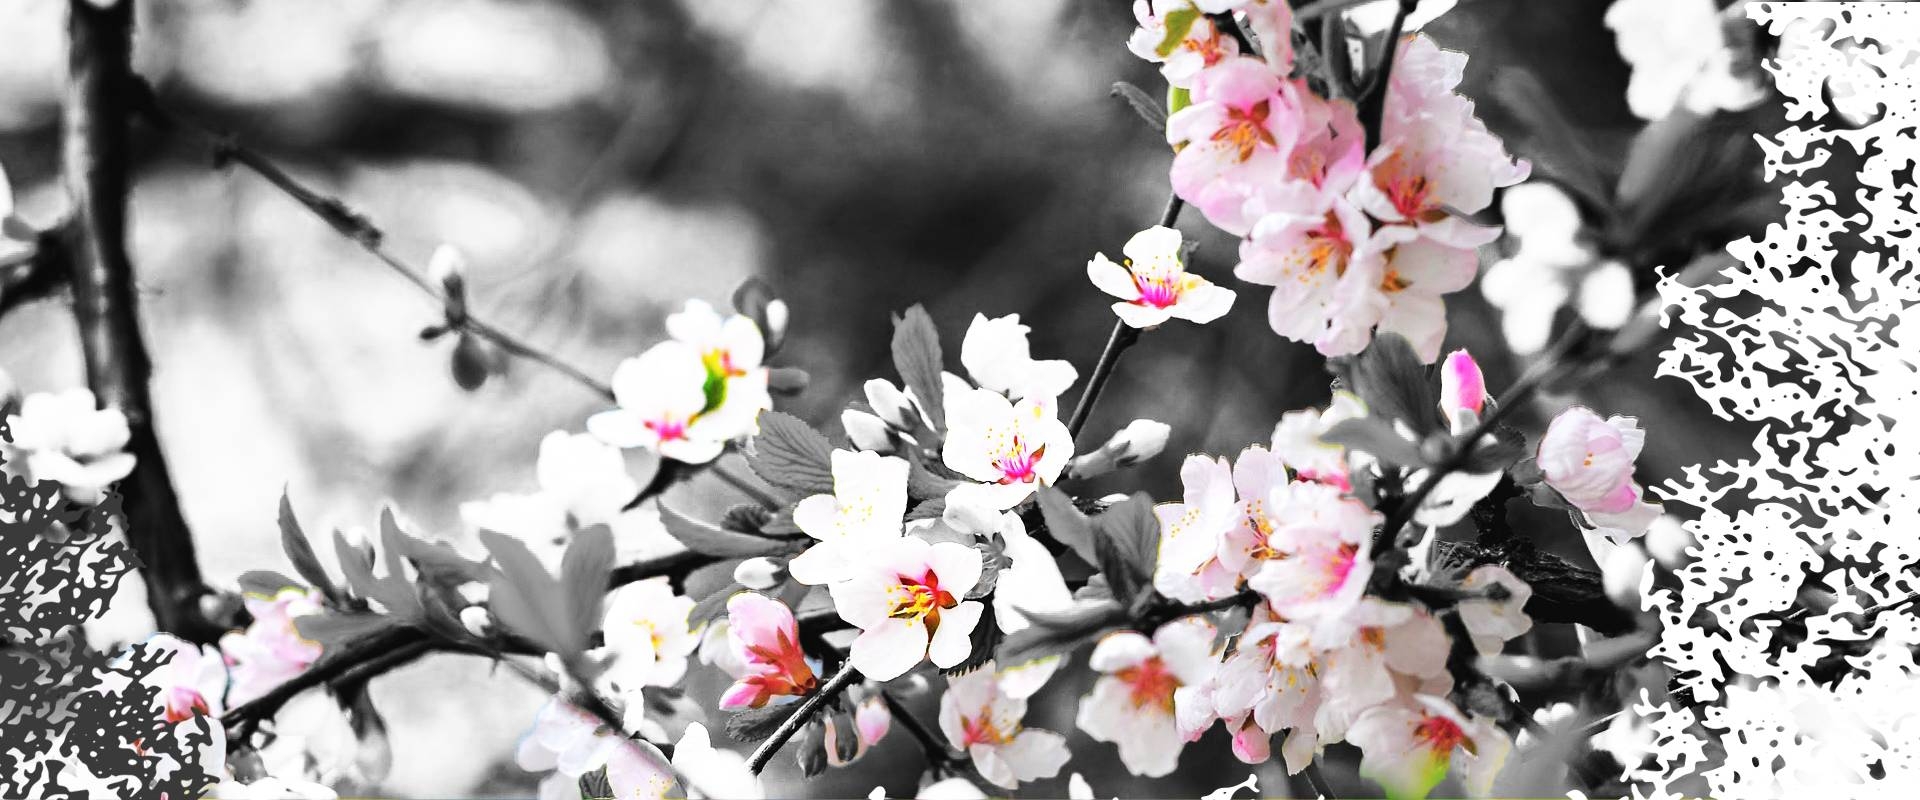 Cerisier en fleur - Budo Club Chartrain